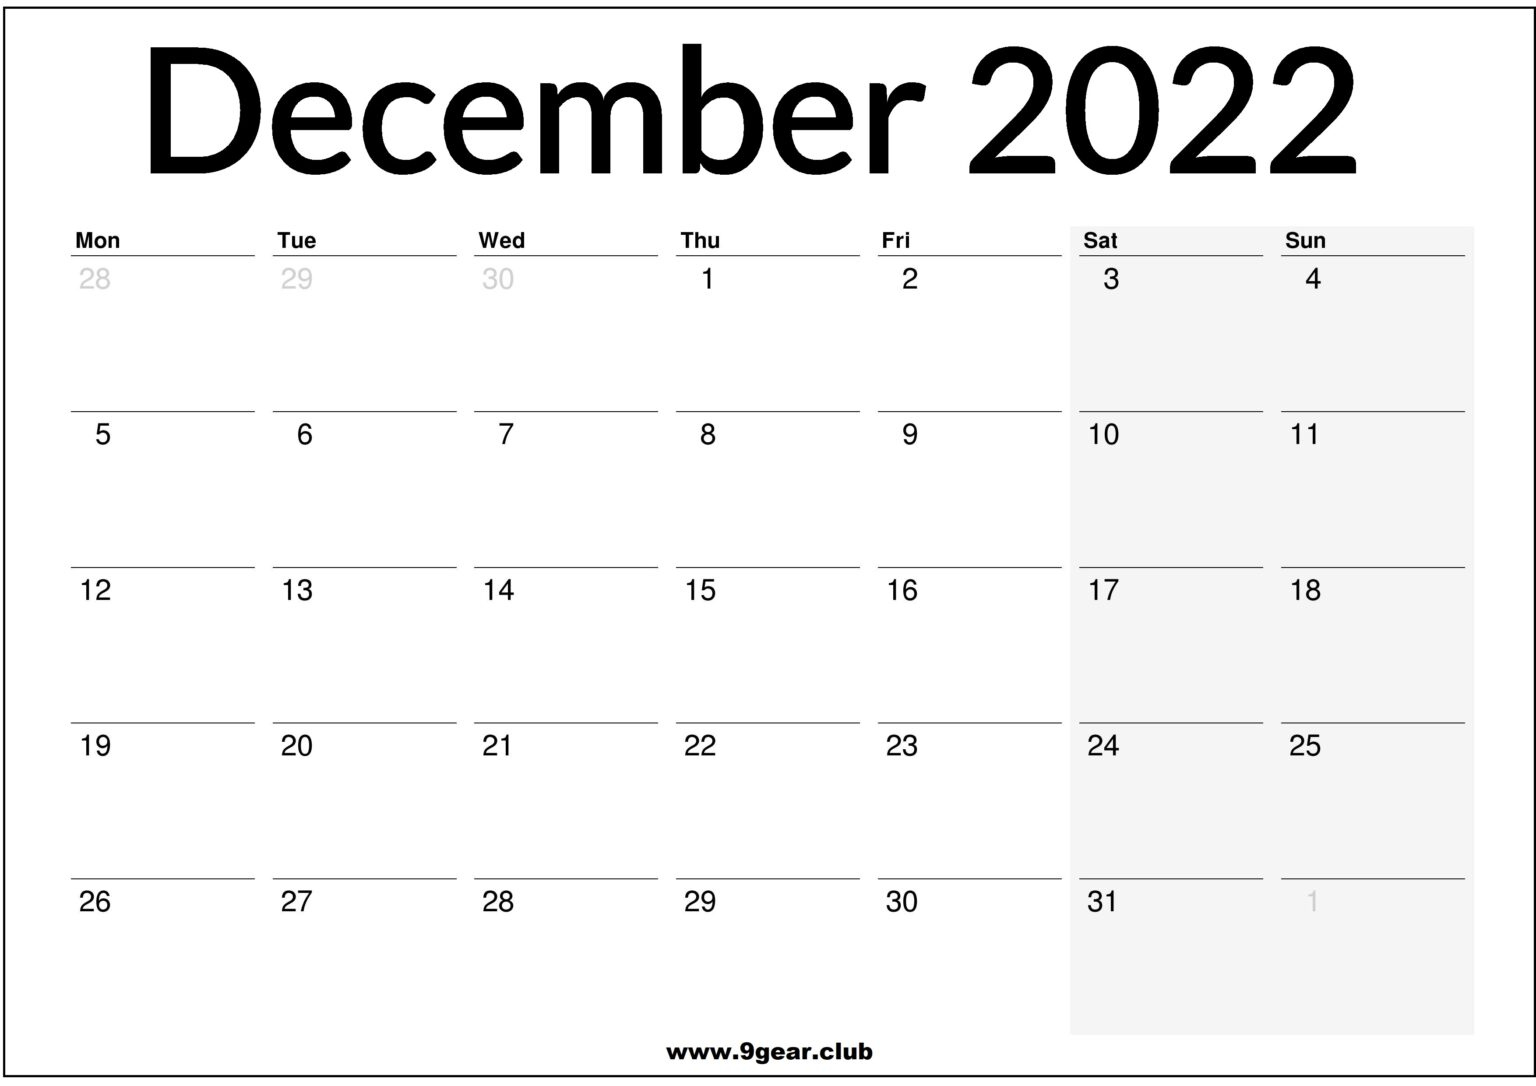 December 2022 Uk Calendar Printable - Printable Calendars 2022 Free Printable Monthly Calendar December 2022